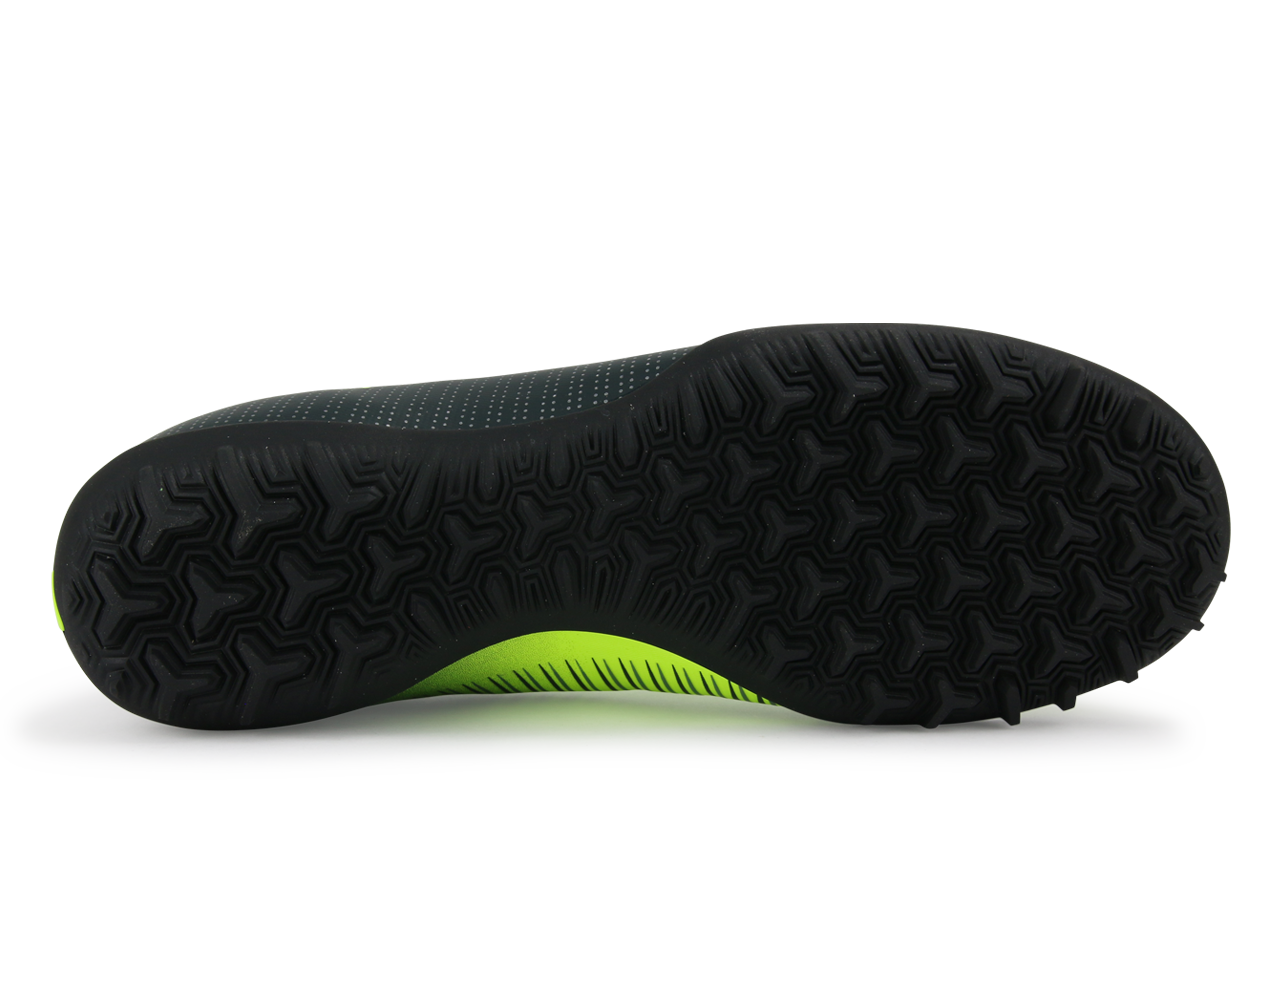 Nike Men's MercurialX Victory VI CR7 Turf Soccer Shoes Seaweed/Volt/Hasta/White